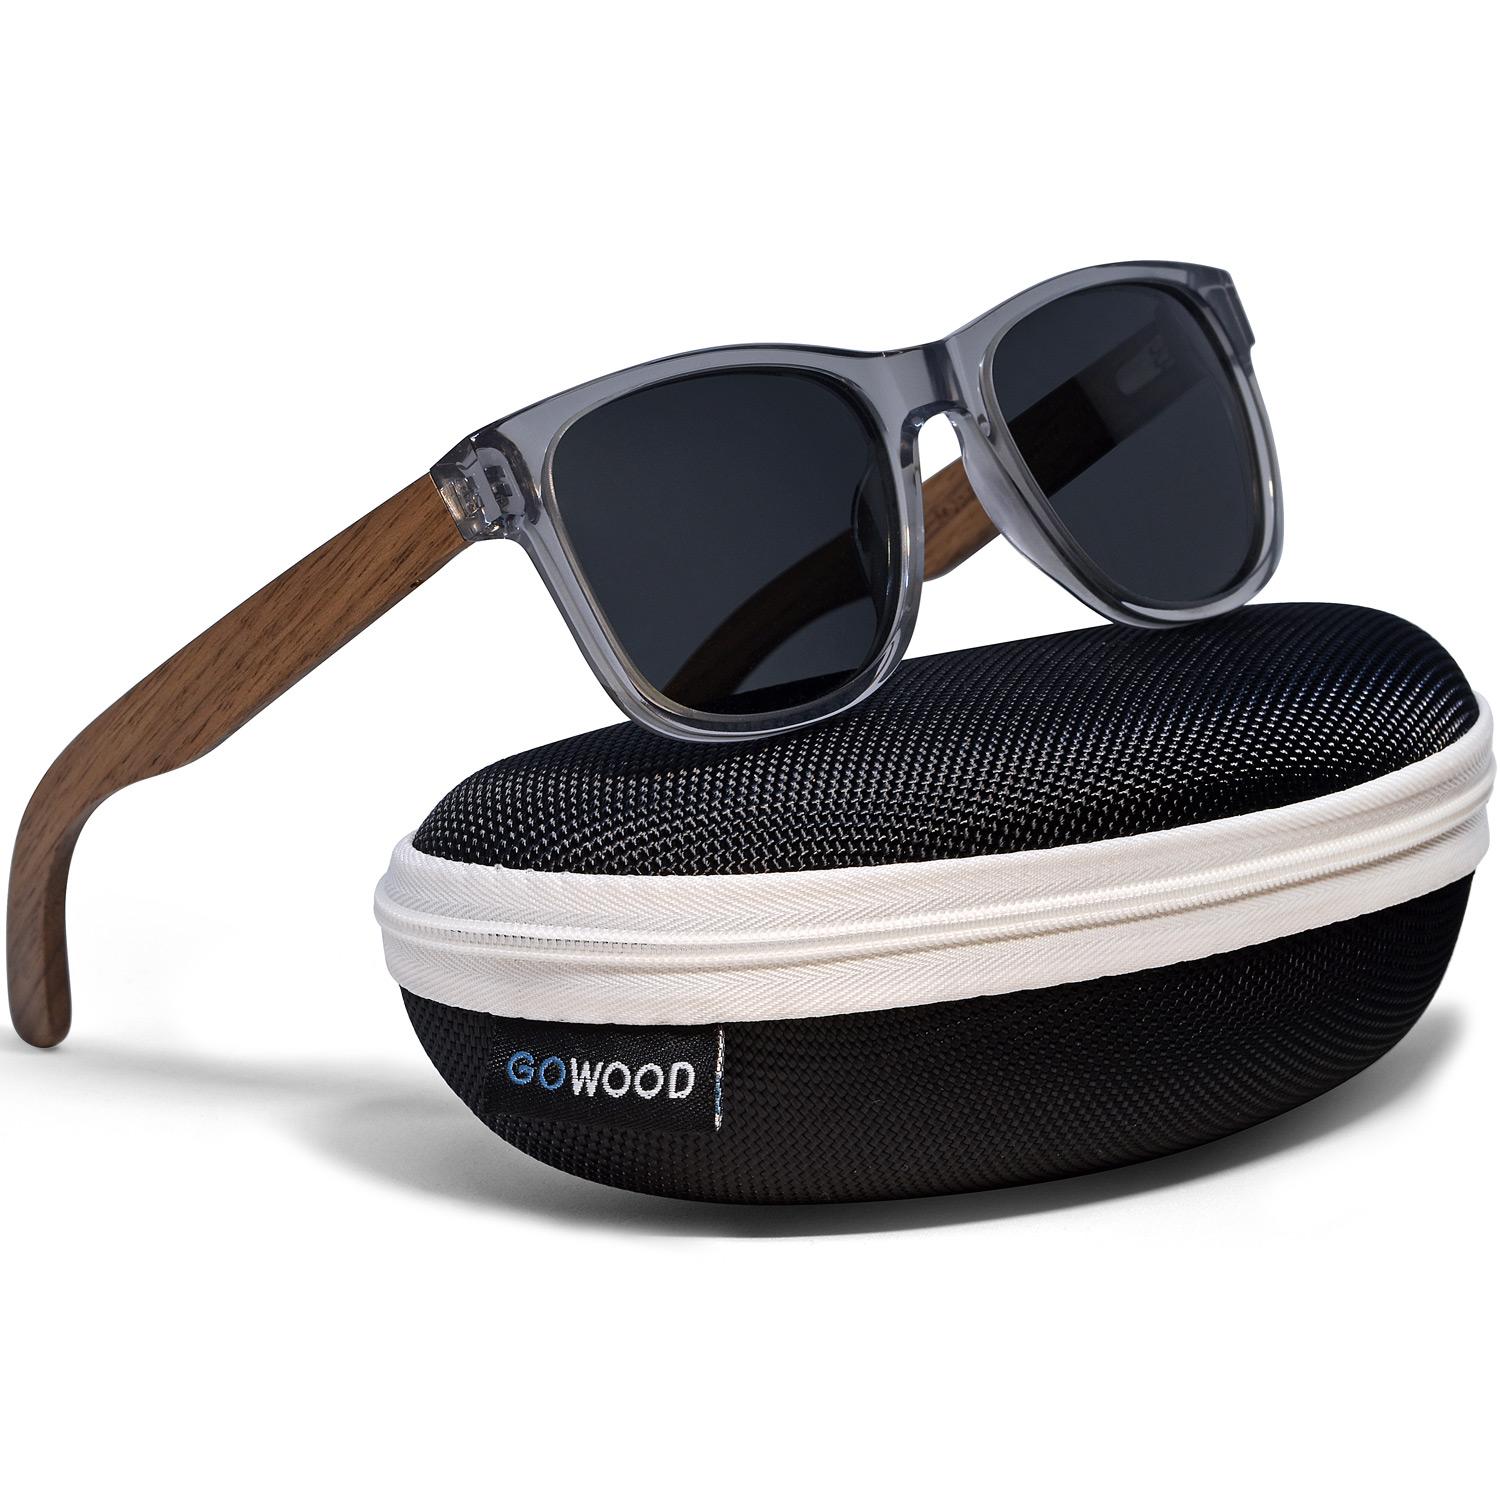 Walnut wood sunglasses classic style transparent frame zipper case